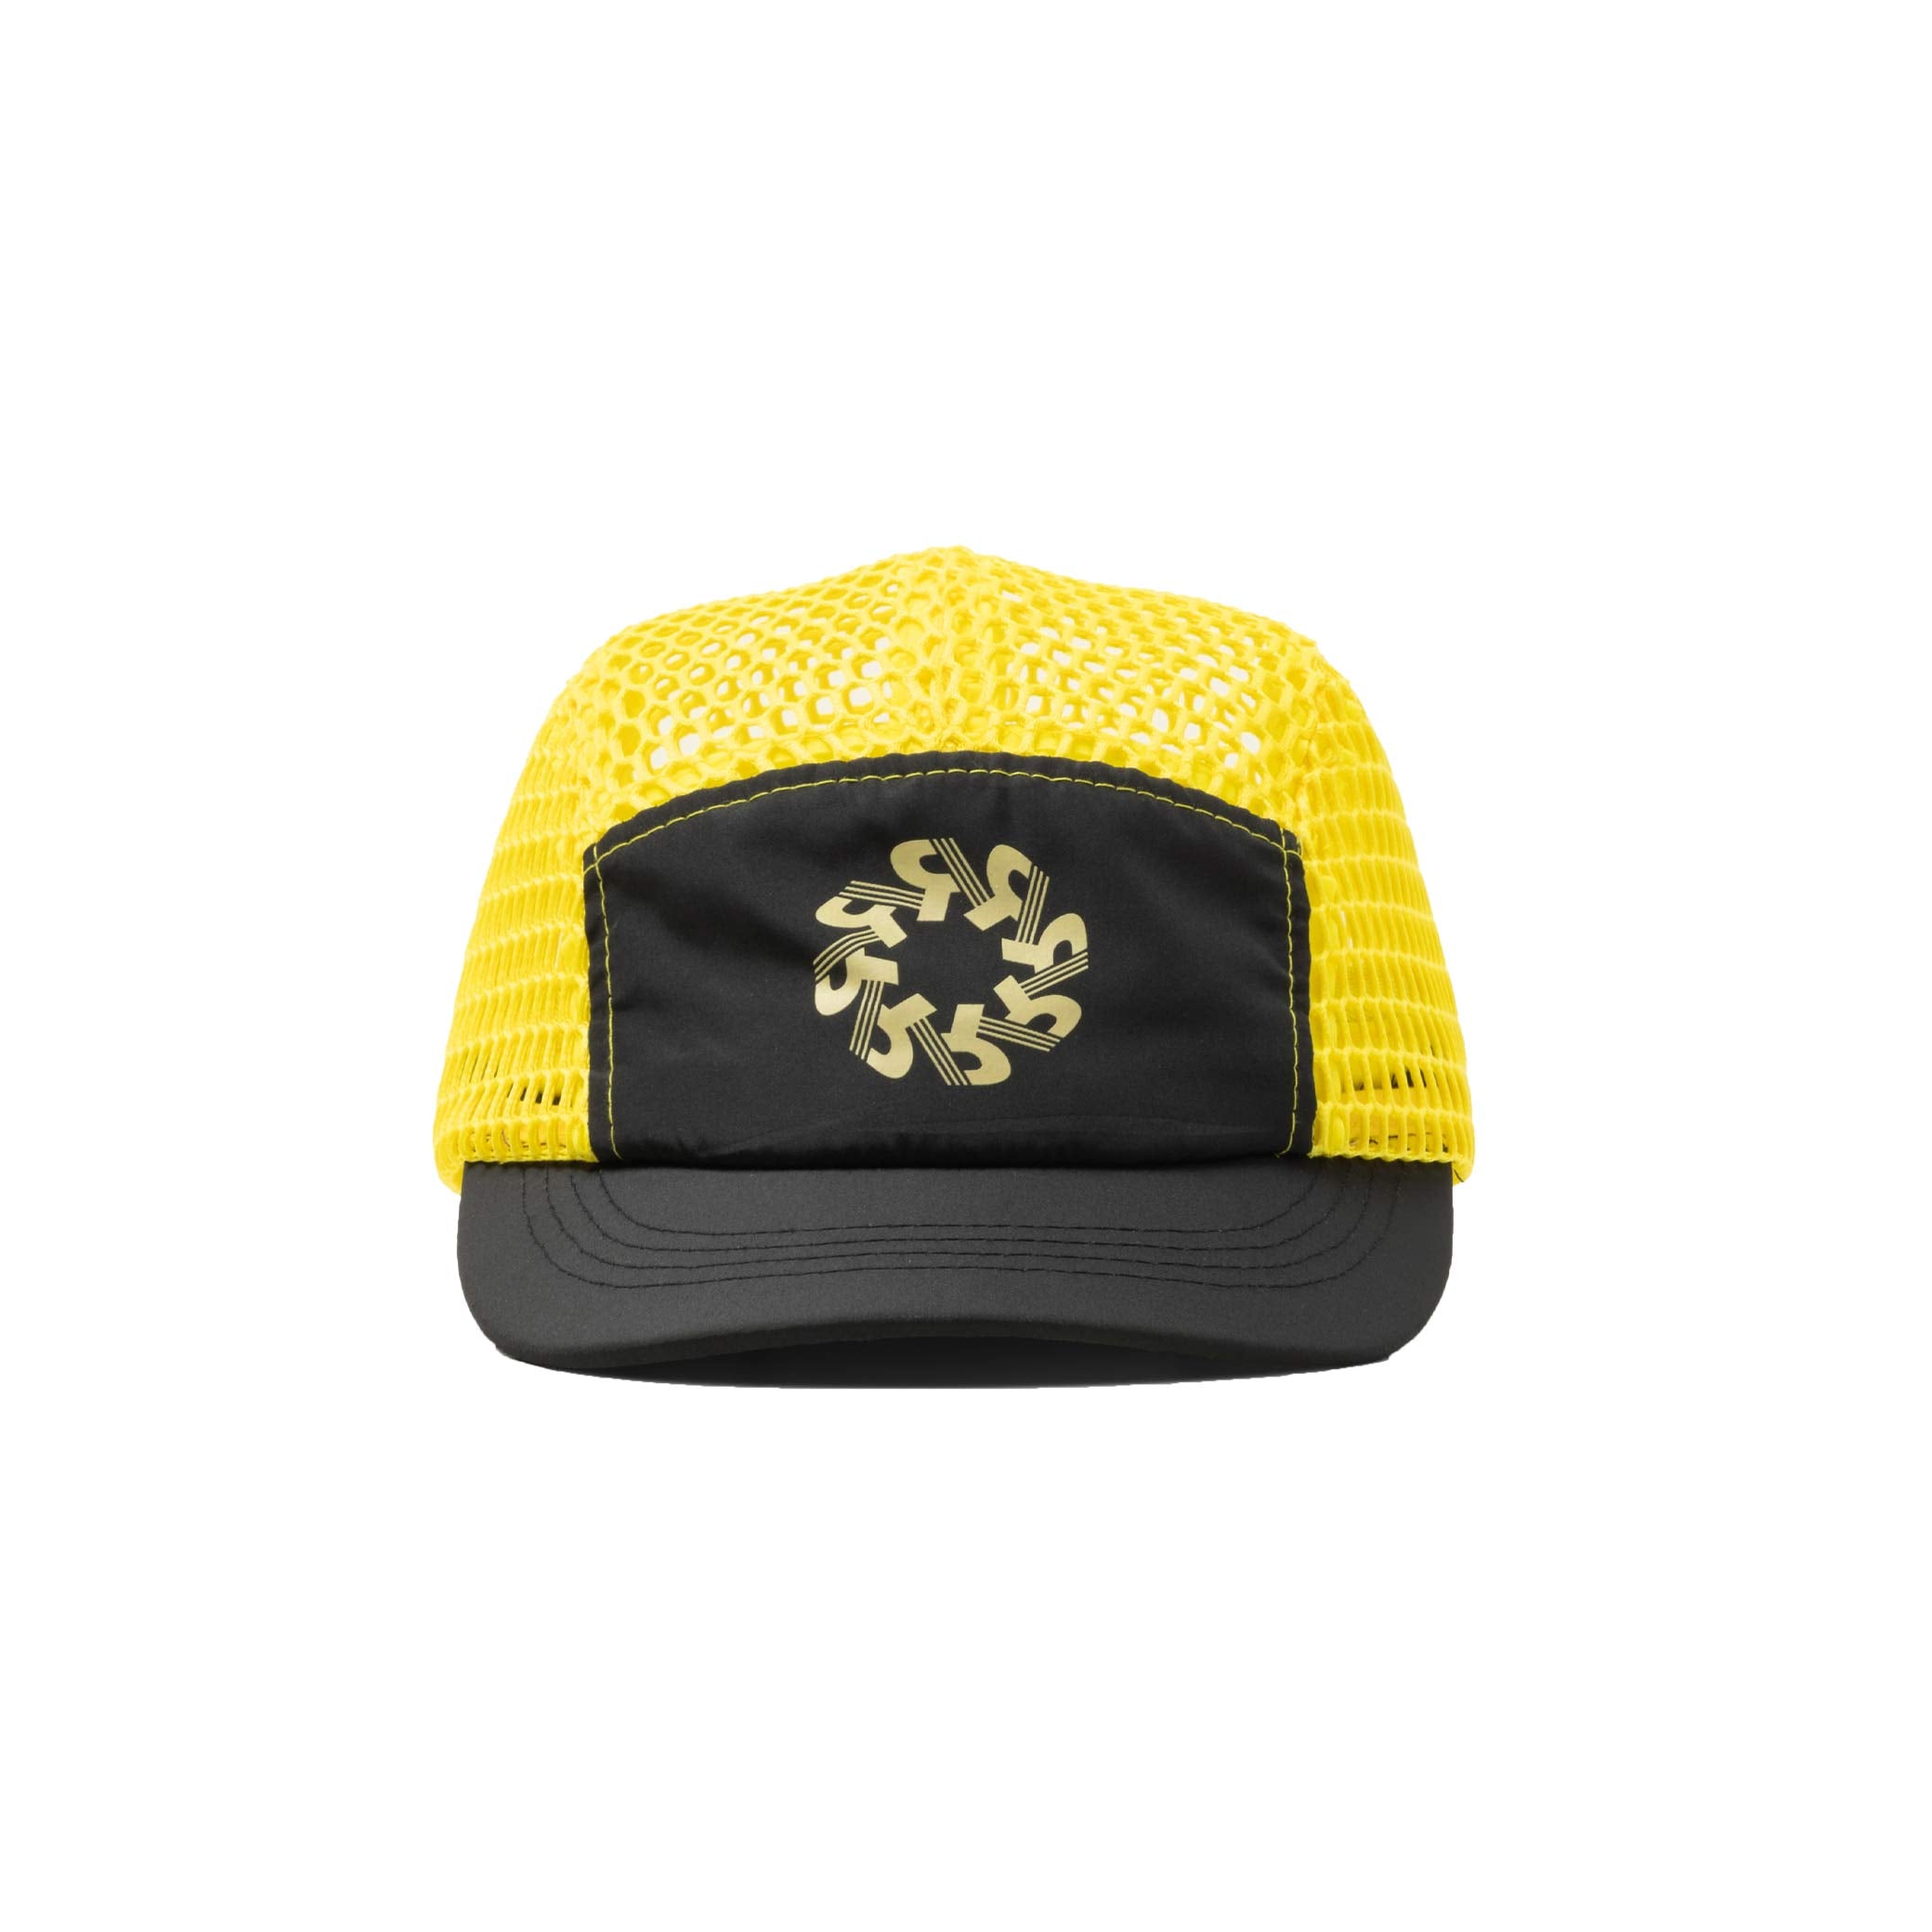 Ultra Mesh Cap - Black & Yellow